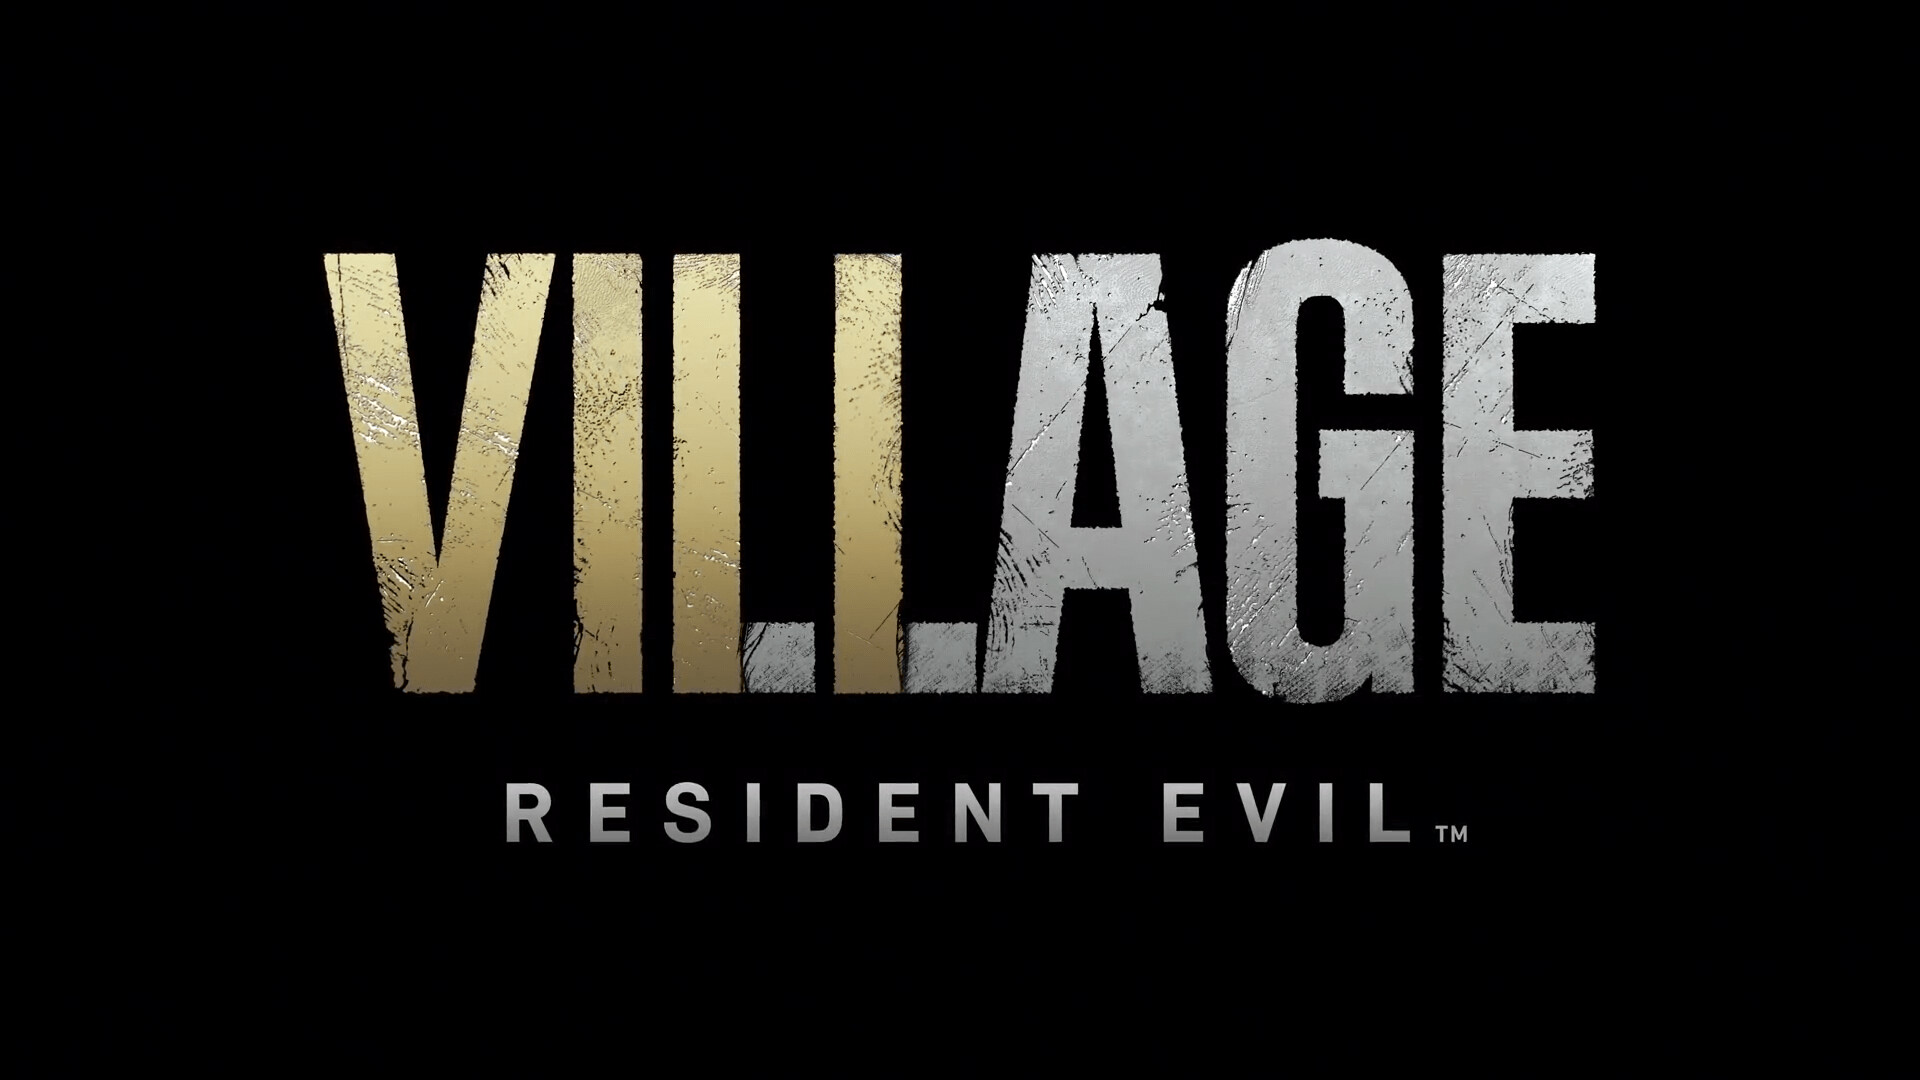 Resident Evil Village: A globally recognizable horror franchise, The eighth major entry. 1920x1080 Full HD Wallpaper.